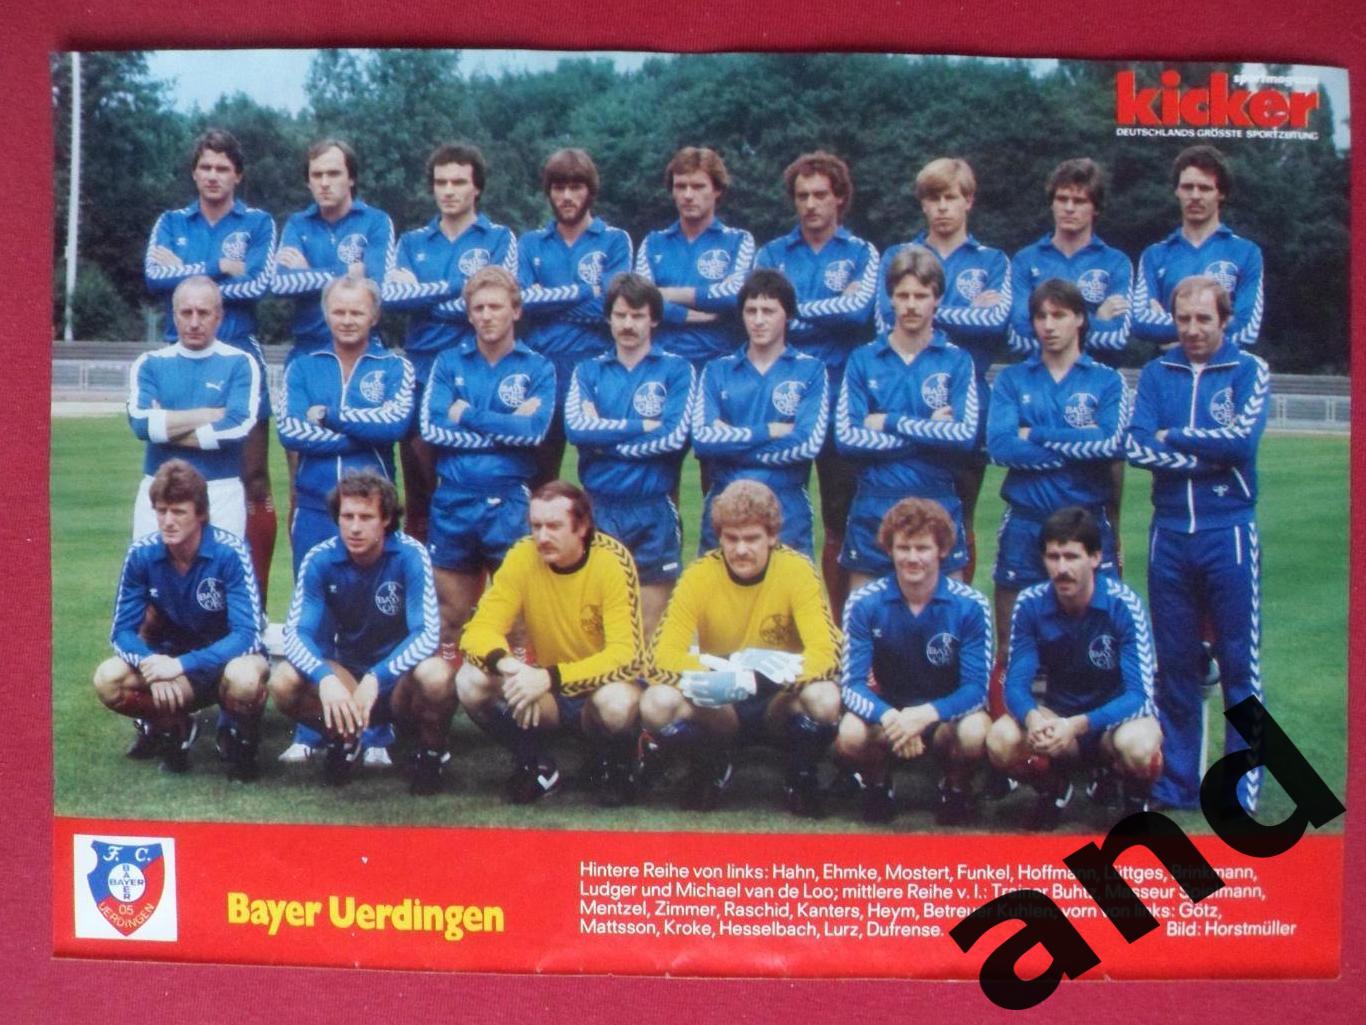 постер Kicker Байер Юрдинген 1979